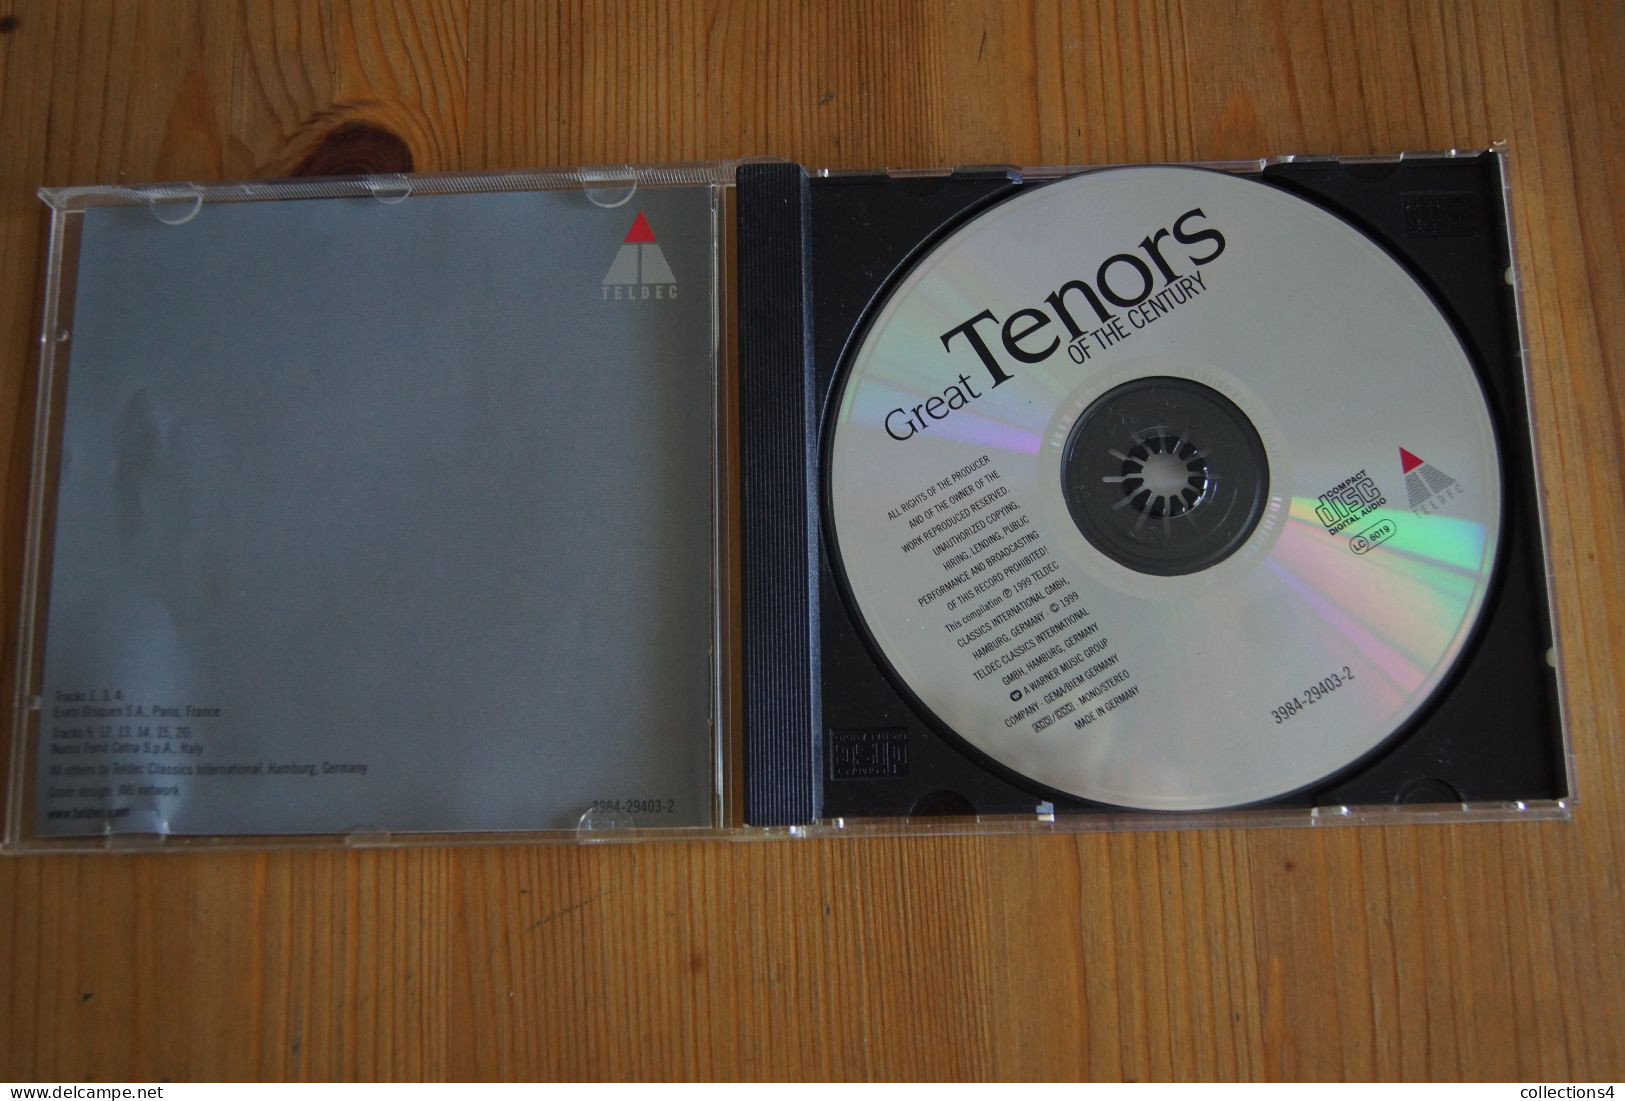 GREAT TENORS OF THE CENTURY CD ALLEMAND 1999 VALEUR + OPERA JOSE CURA P SEIFFERT R ALAGNA ETC - Soundtracks, Film Music